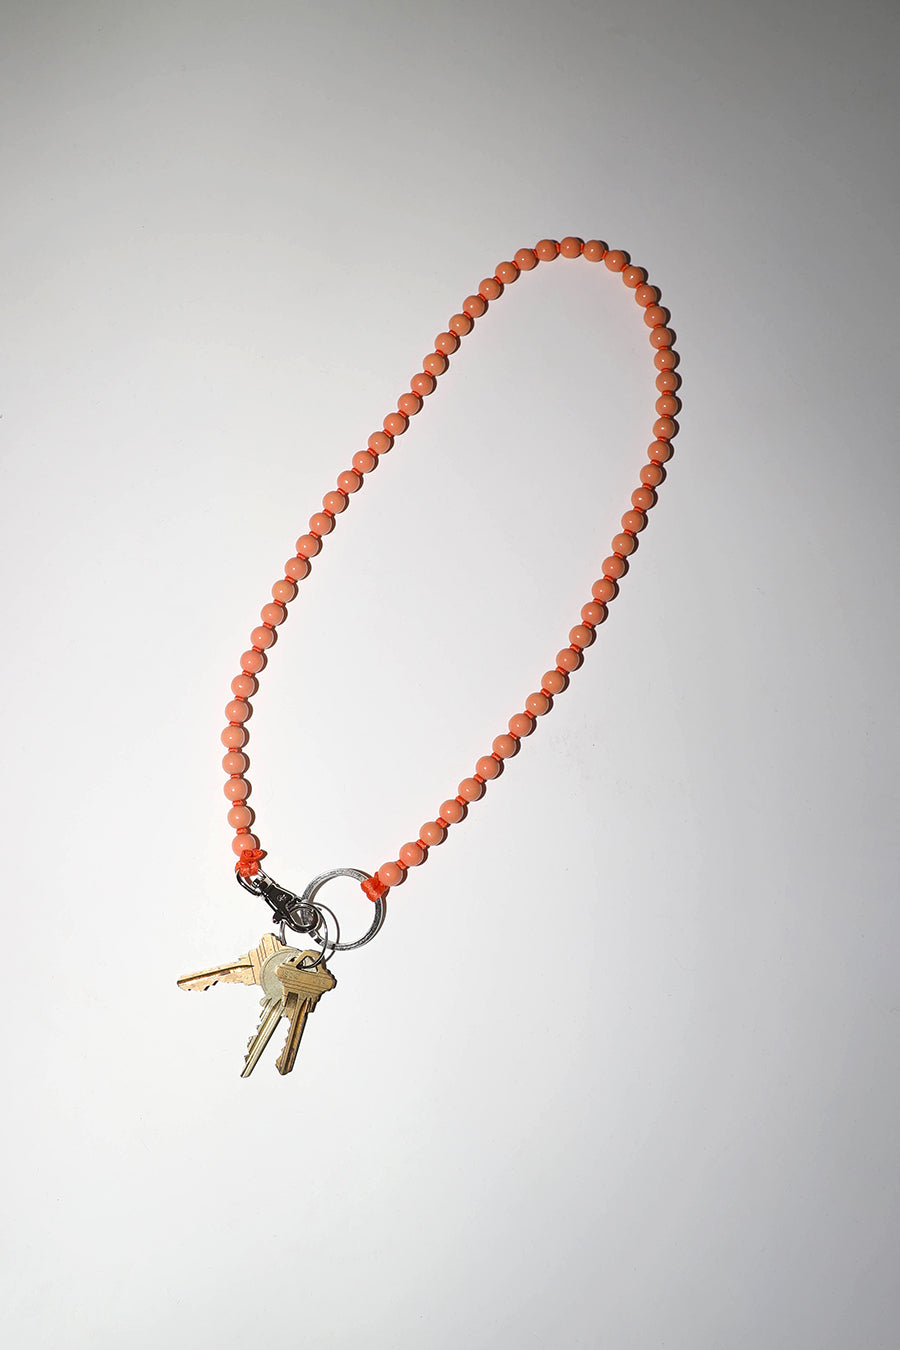 Ina Seifart Perlen Long Keyholder in Peach with Orange Thread